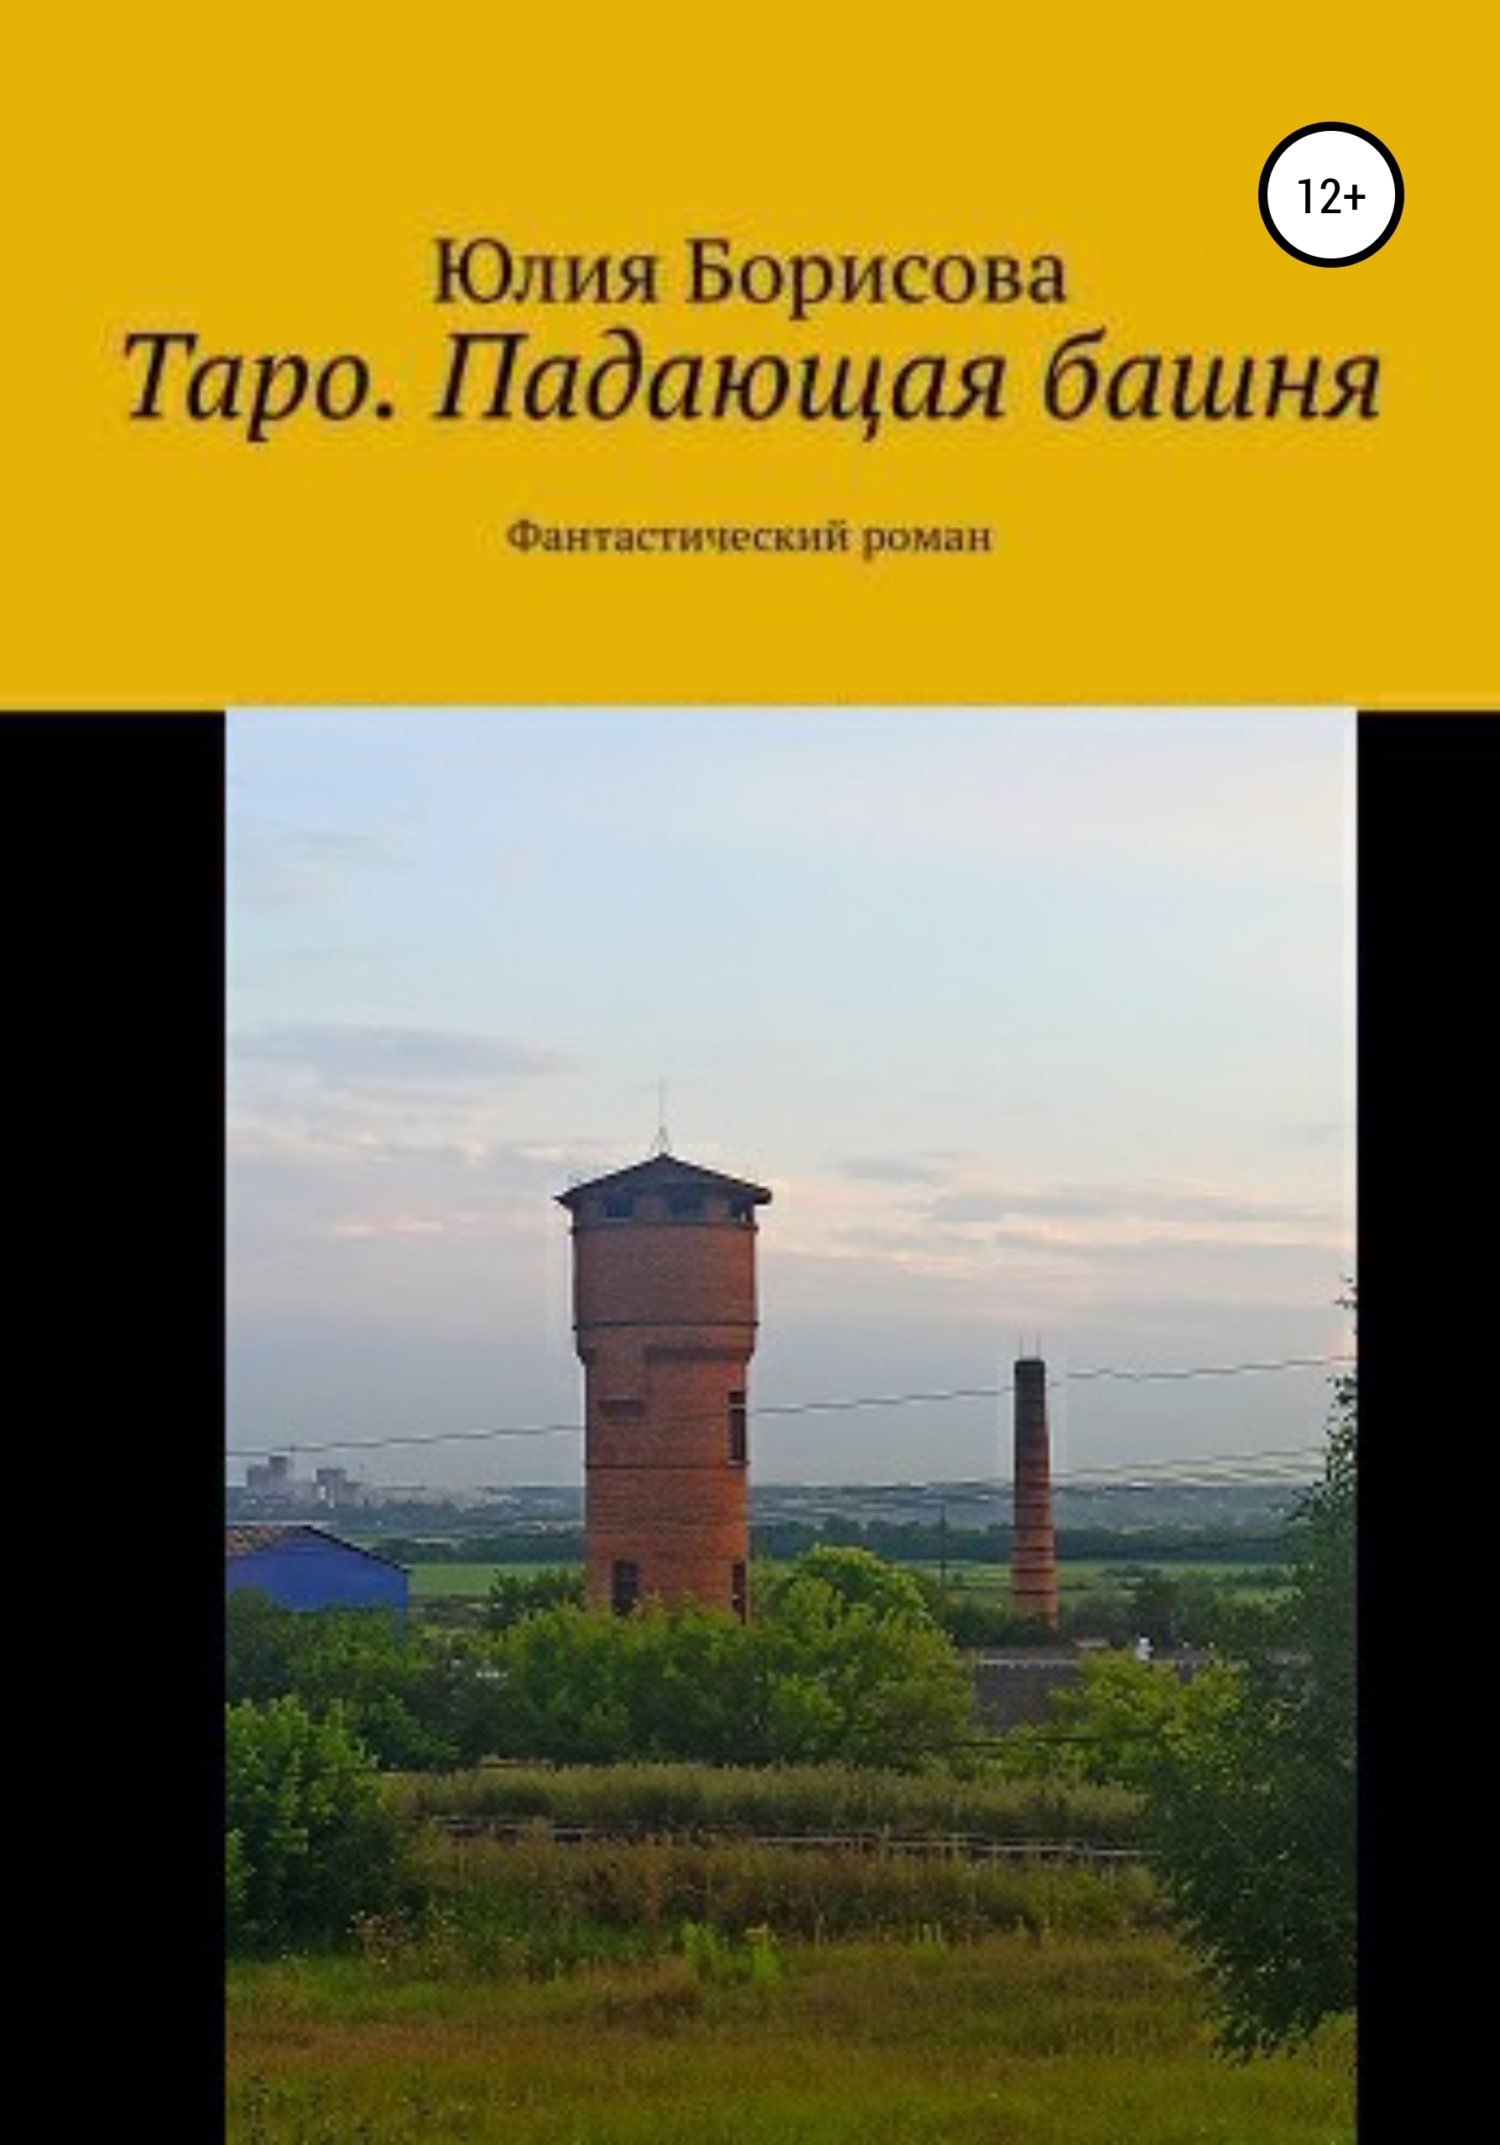 Таро: падающая башня